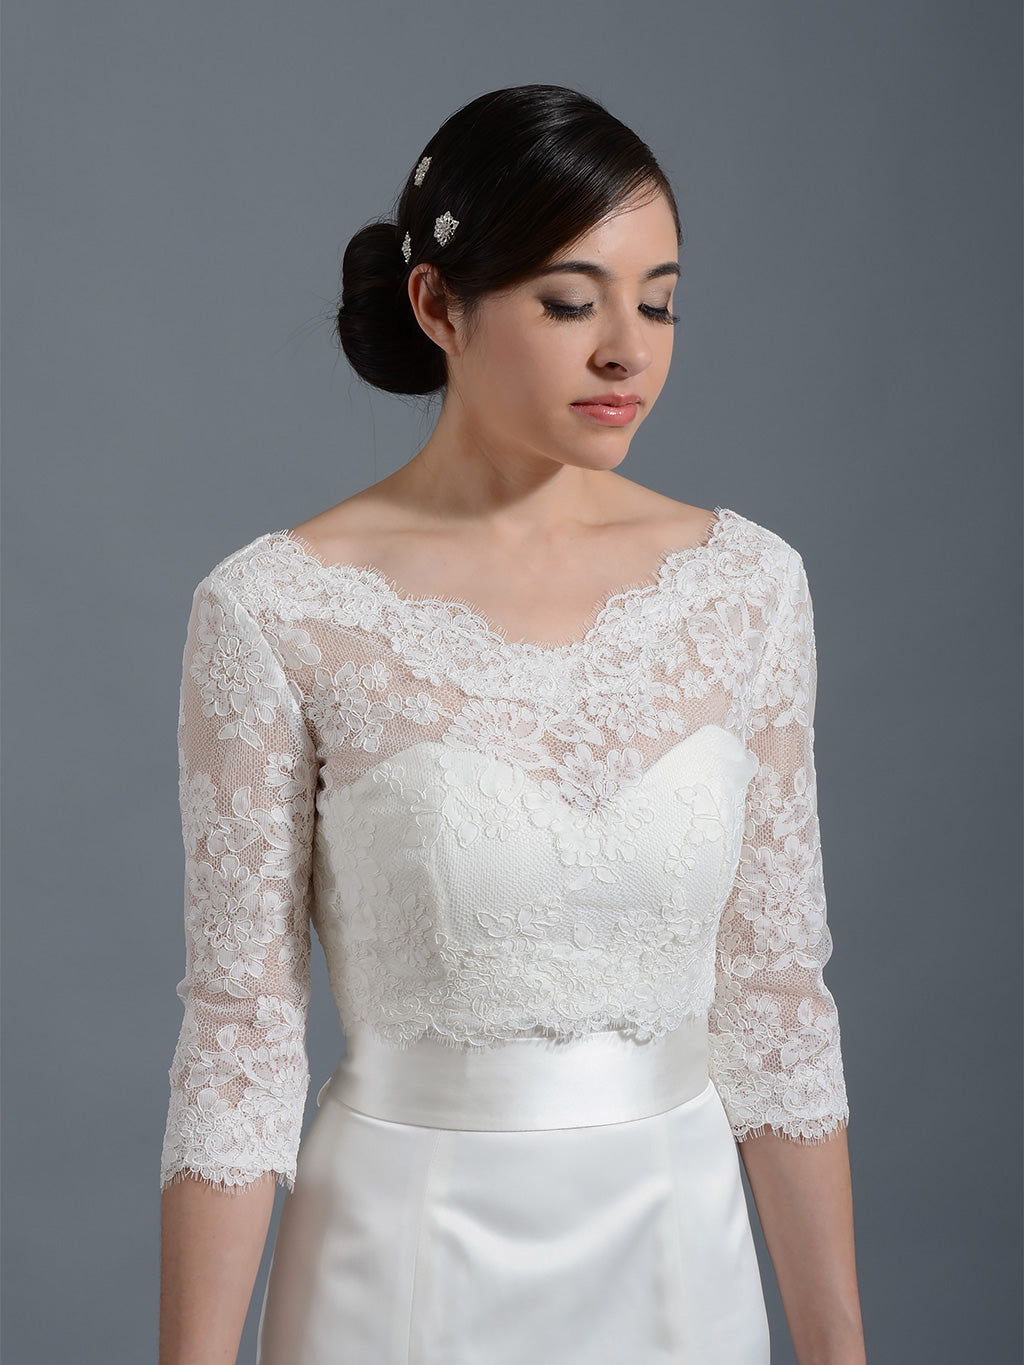 Snowskite Womens Elegant Cap Sleeves Lace Wedding Bridal Bolero 